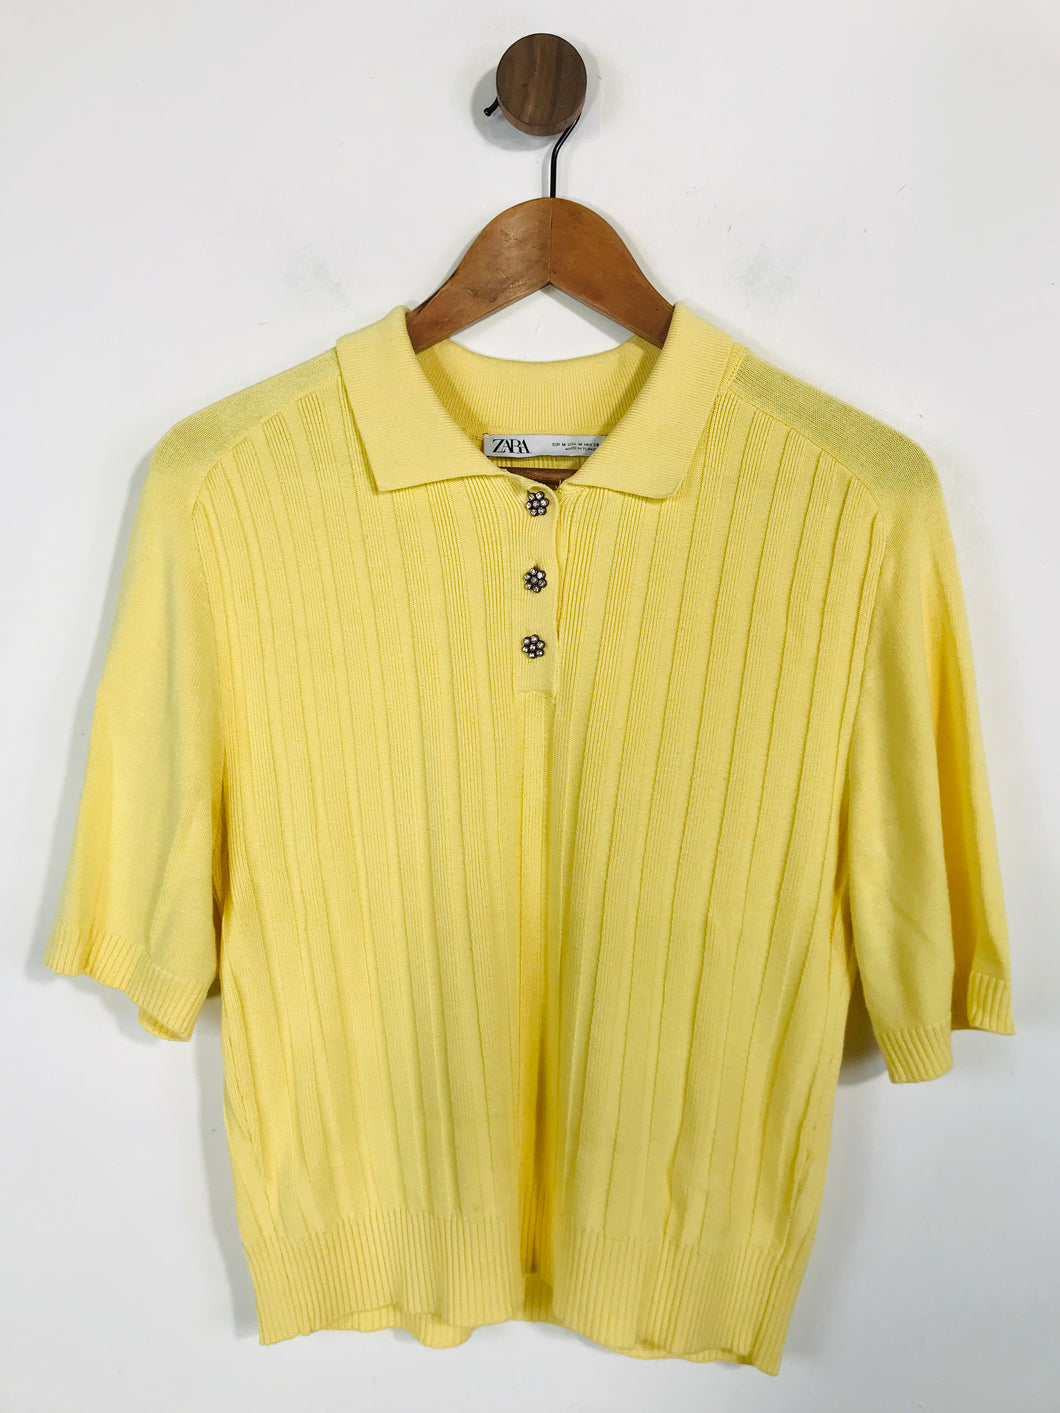 Zara Women's Knit Ribbed Collared Blouse | M UK10-12 | Yellow